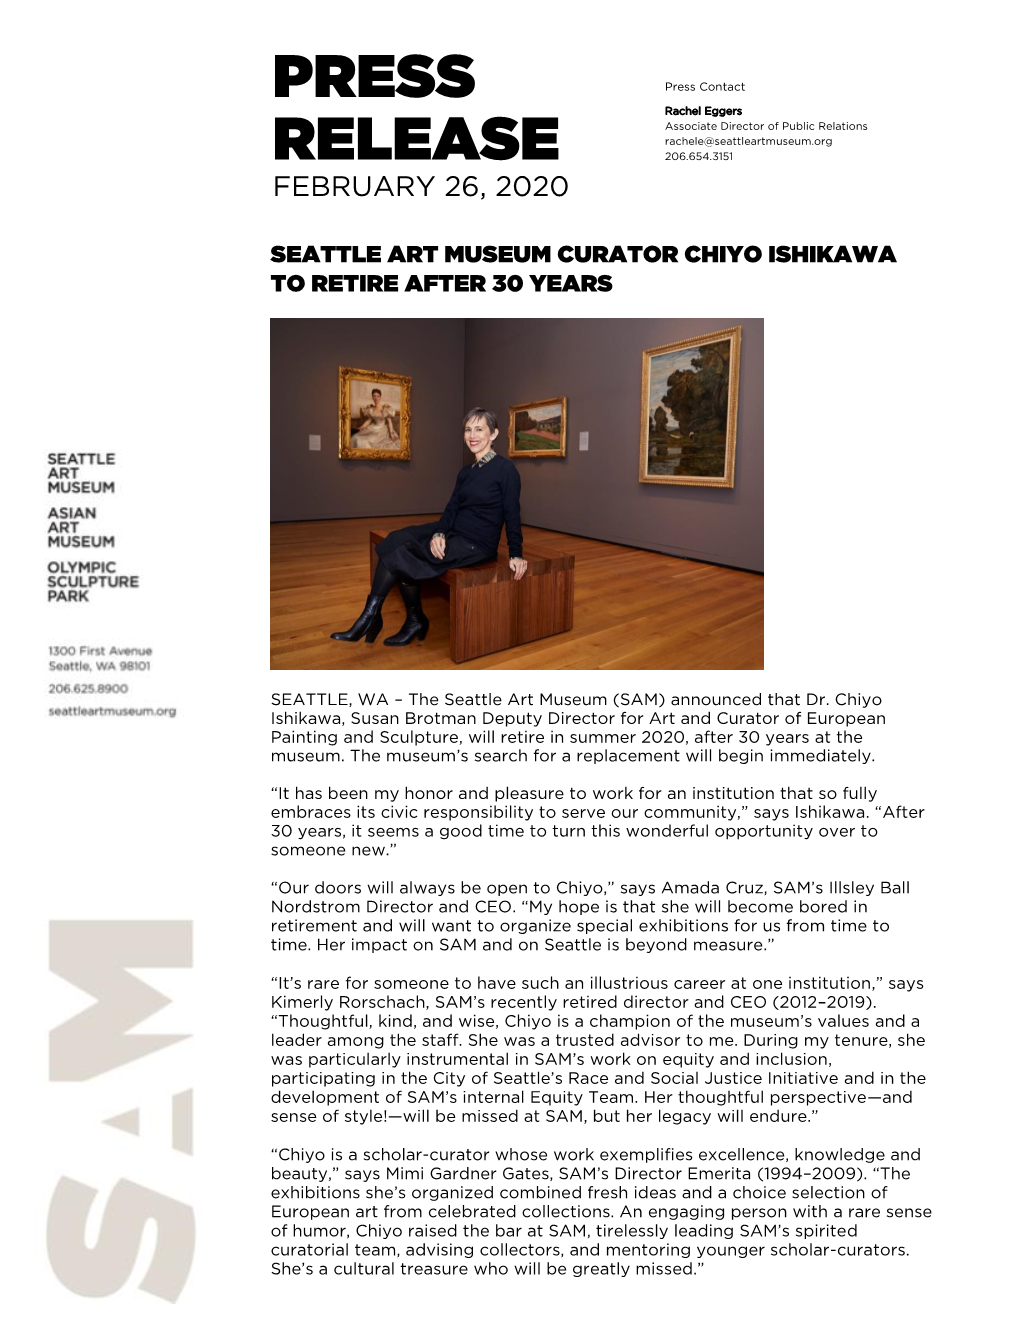 Seattle Art Museum Curator Chiyo Ishikawa to Retire After 30 Years